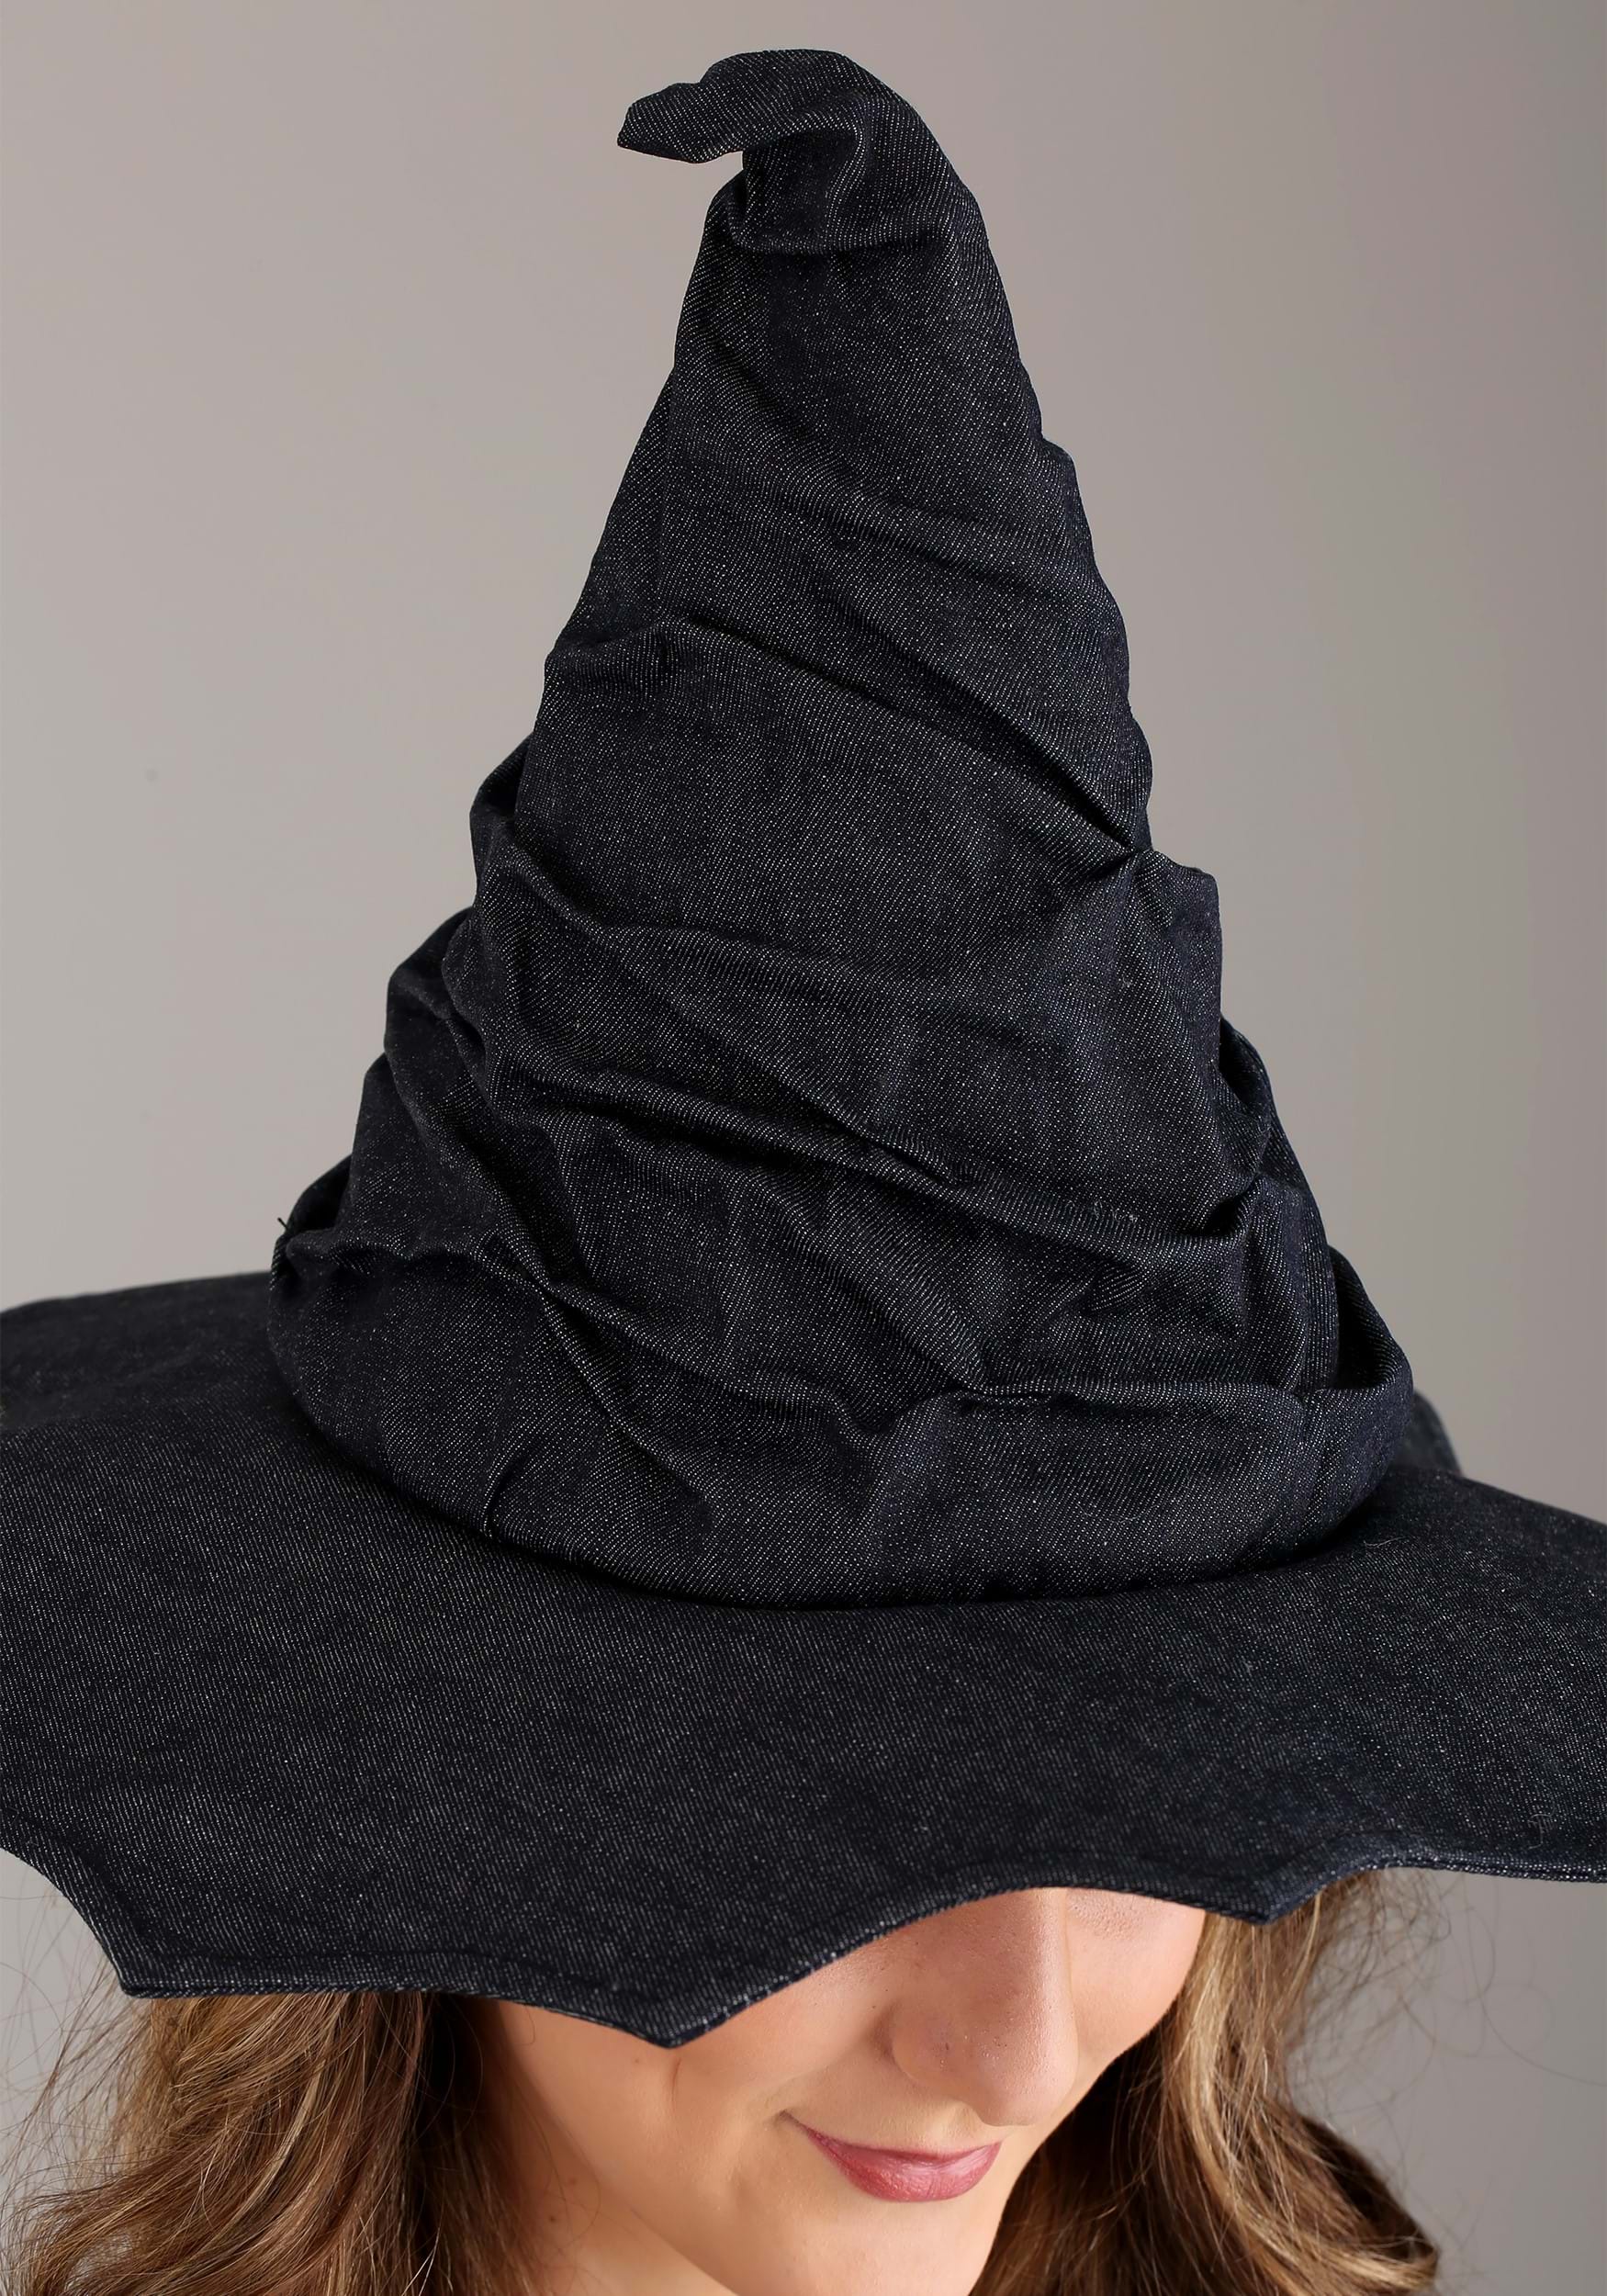 Scrunchie Witch Hat Accessory